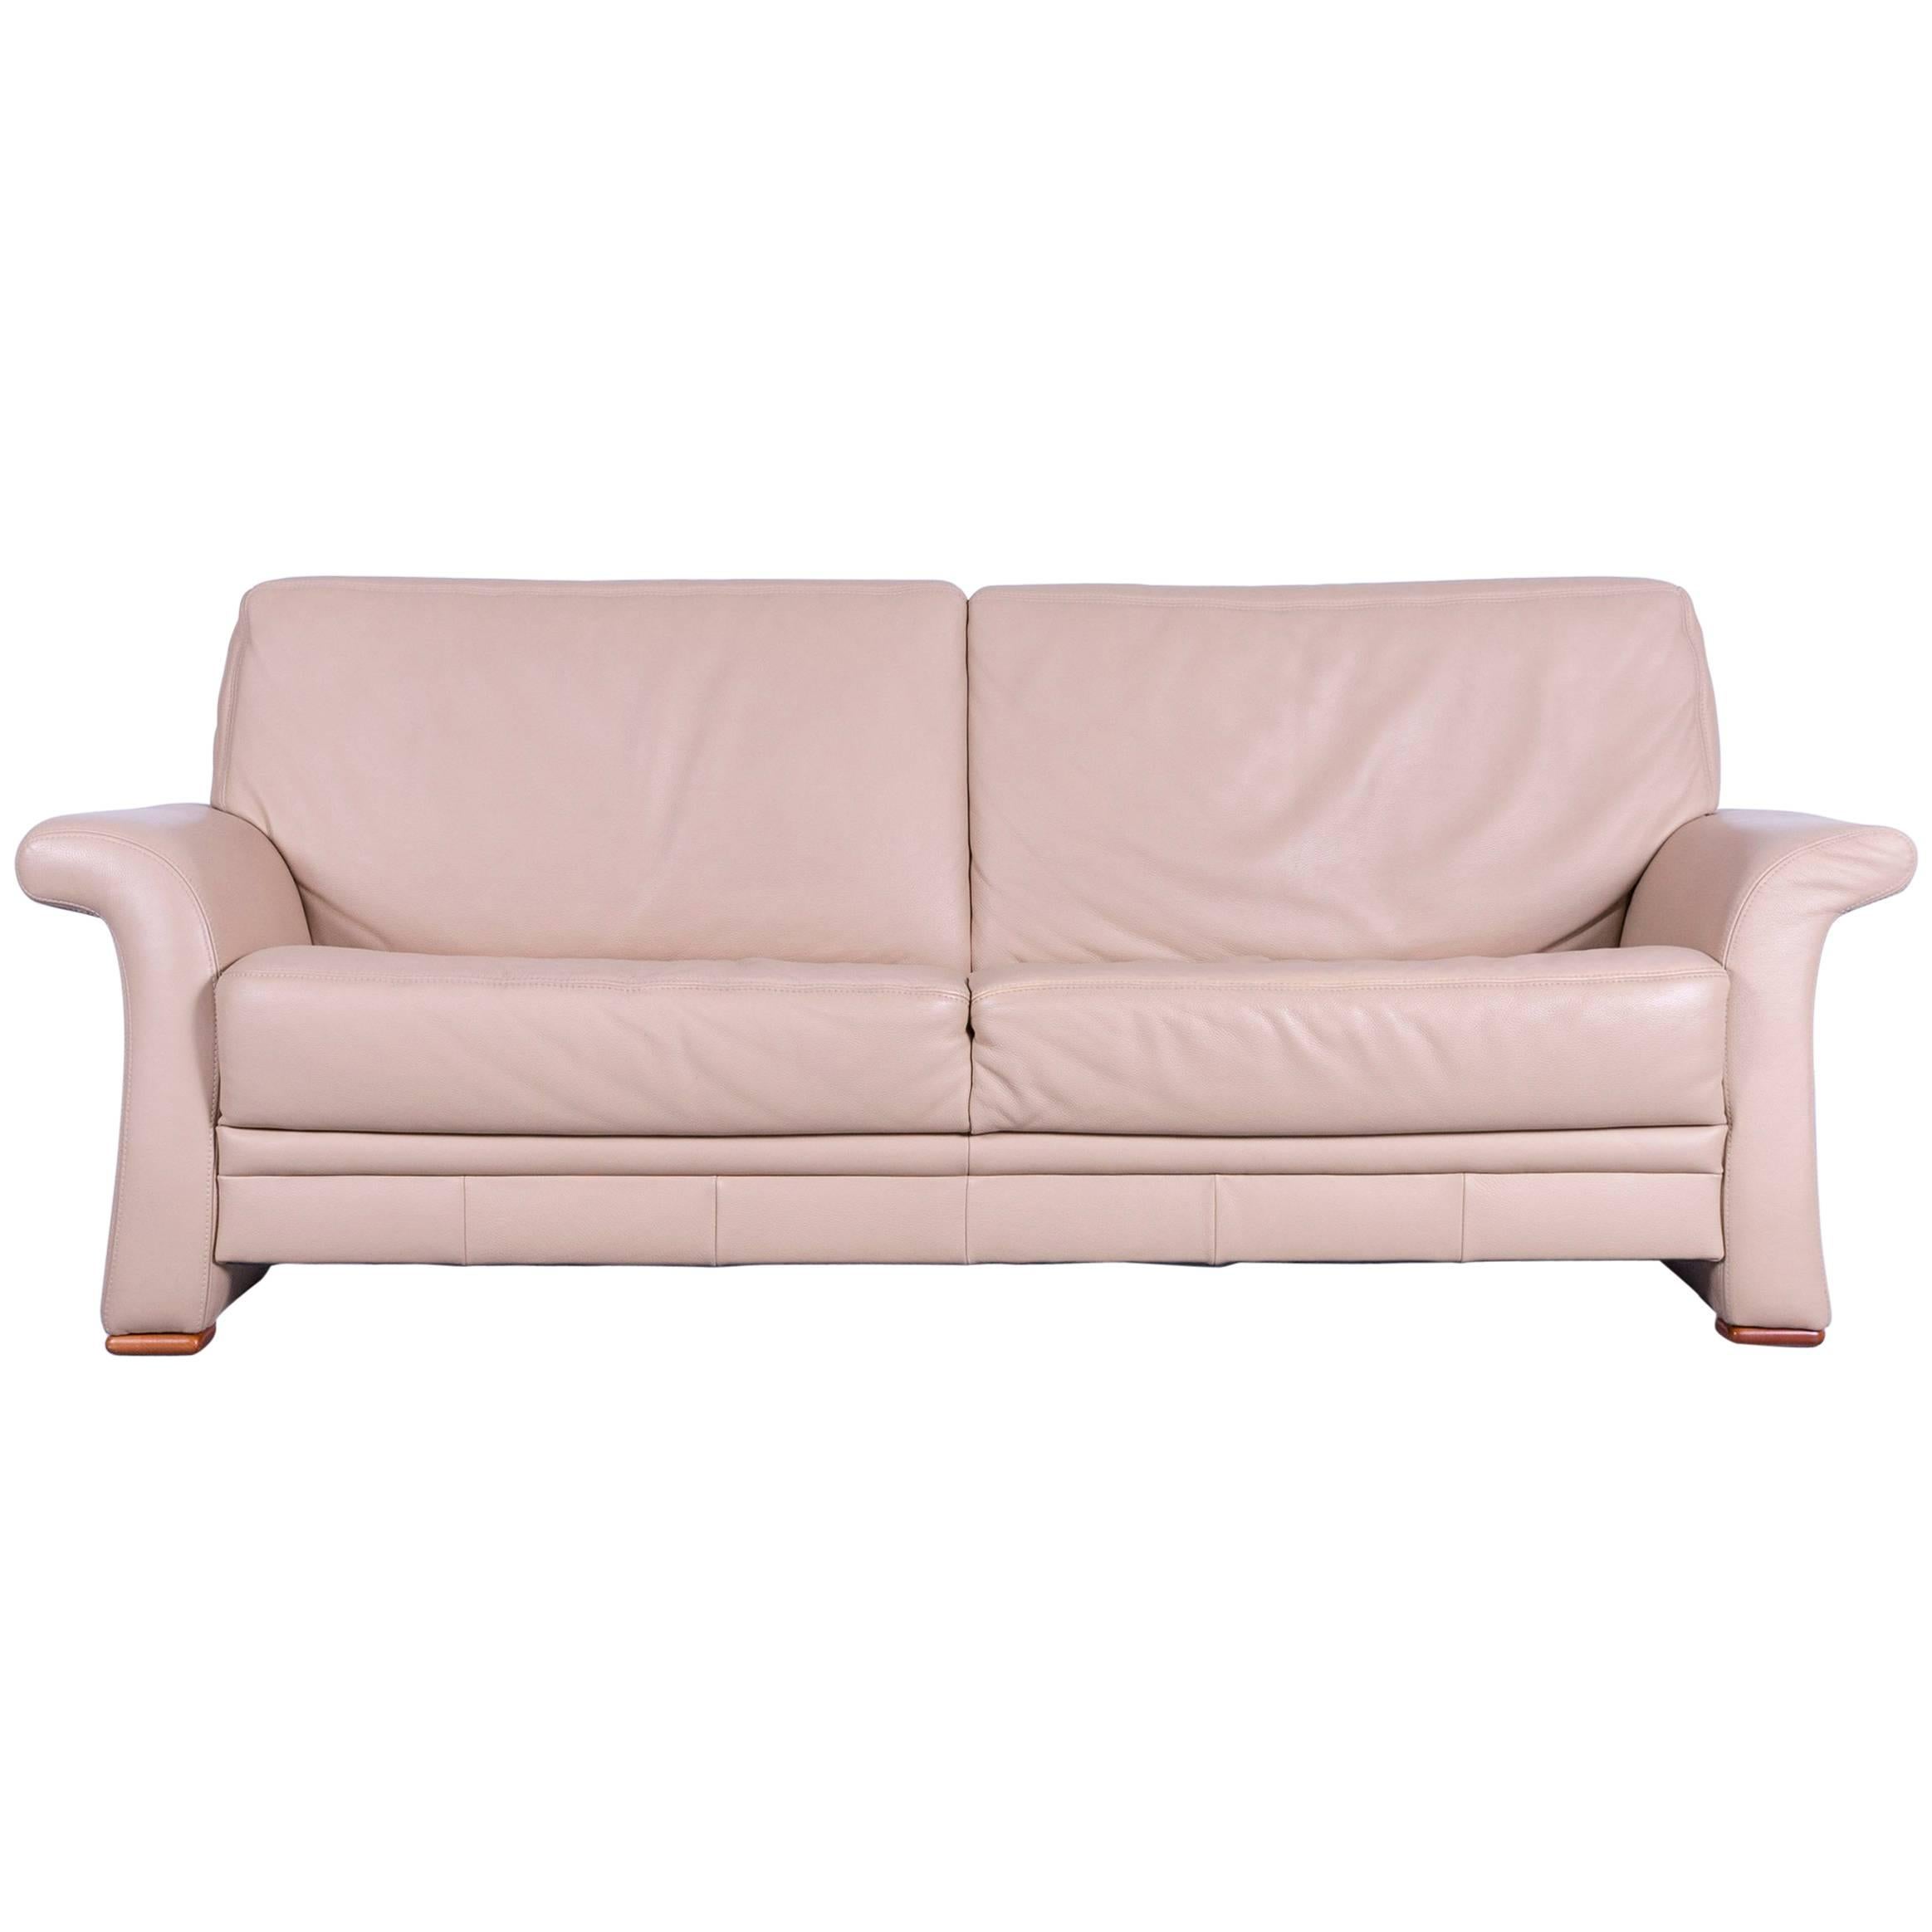 Euri Collection Designer Leather Sofa Three-Seat Beige